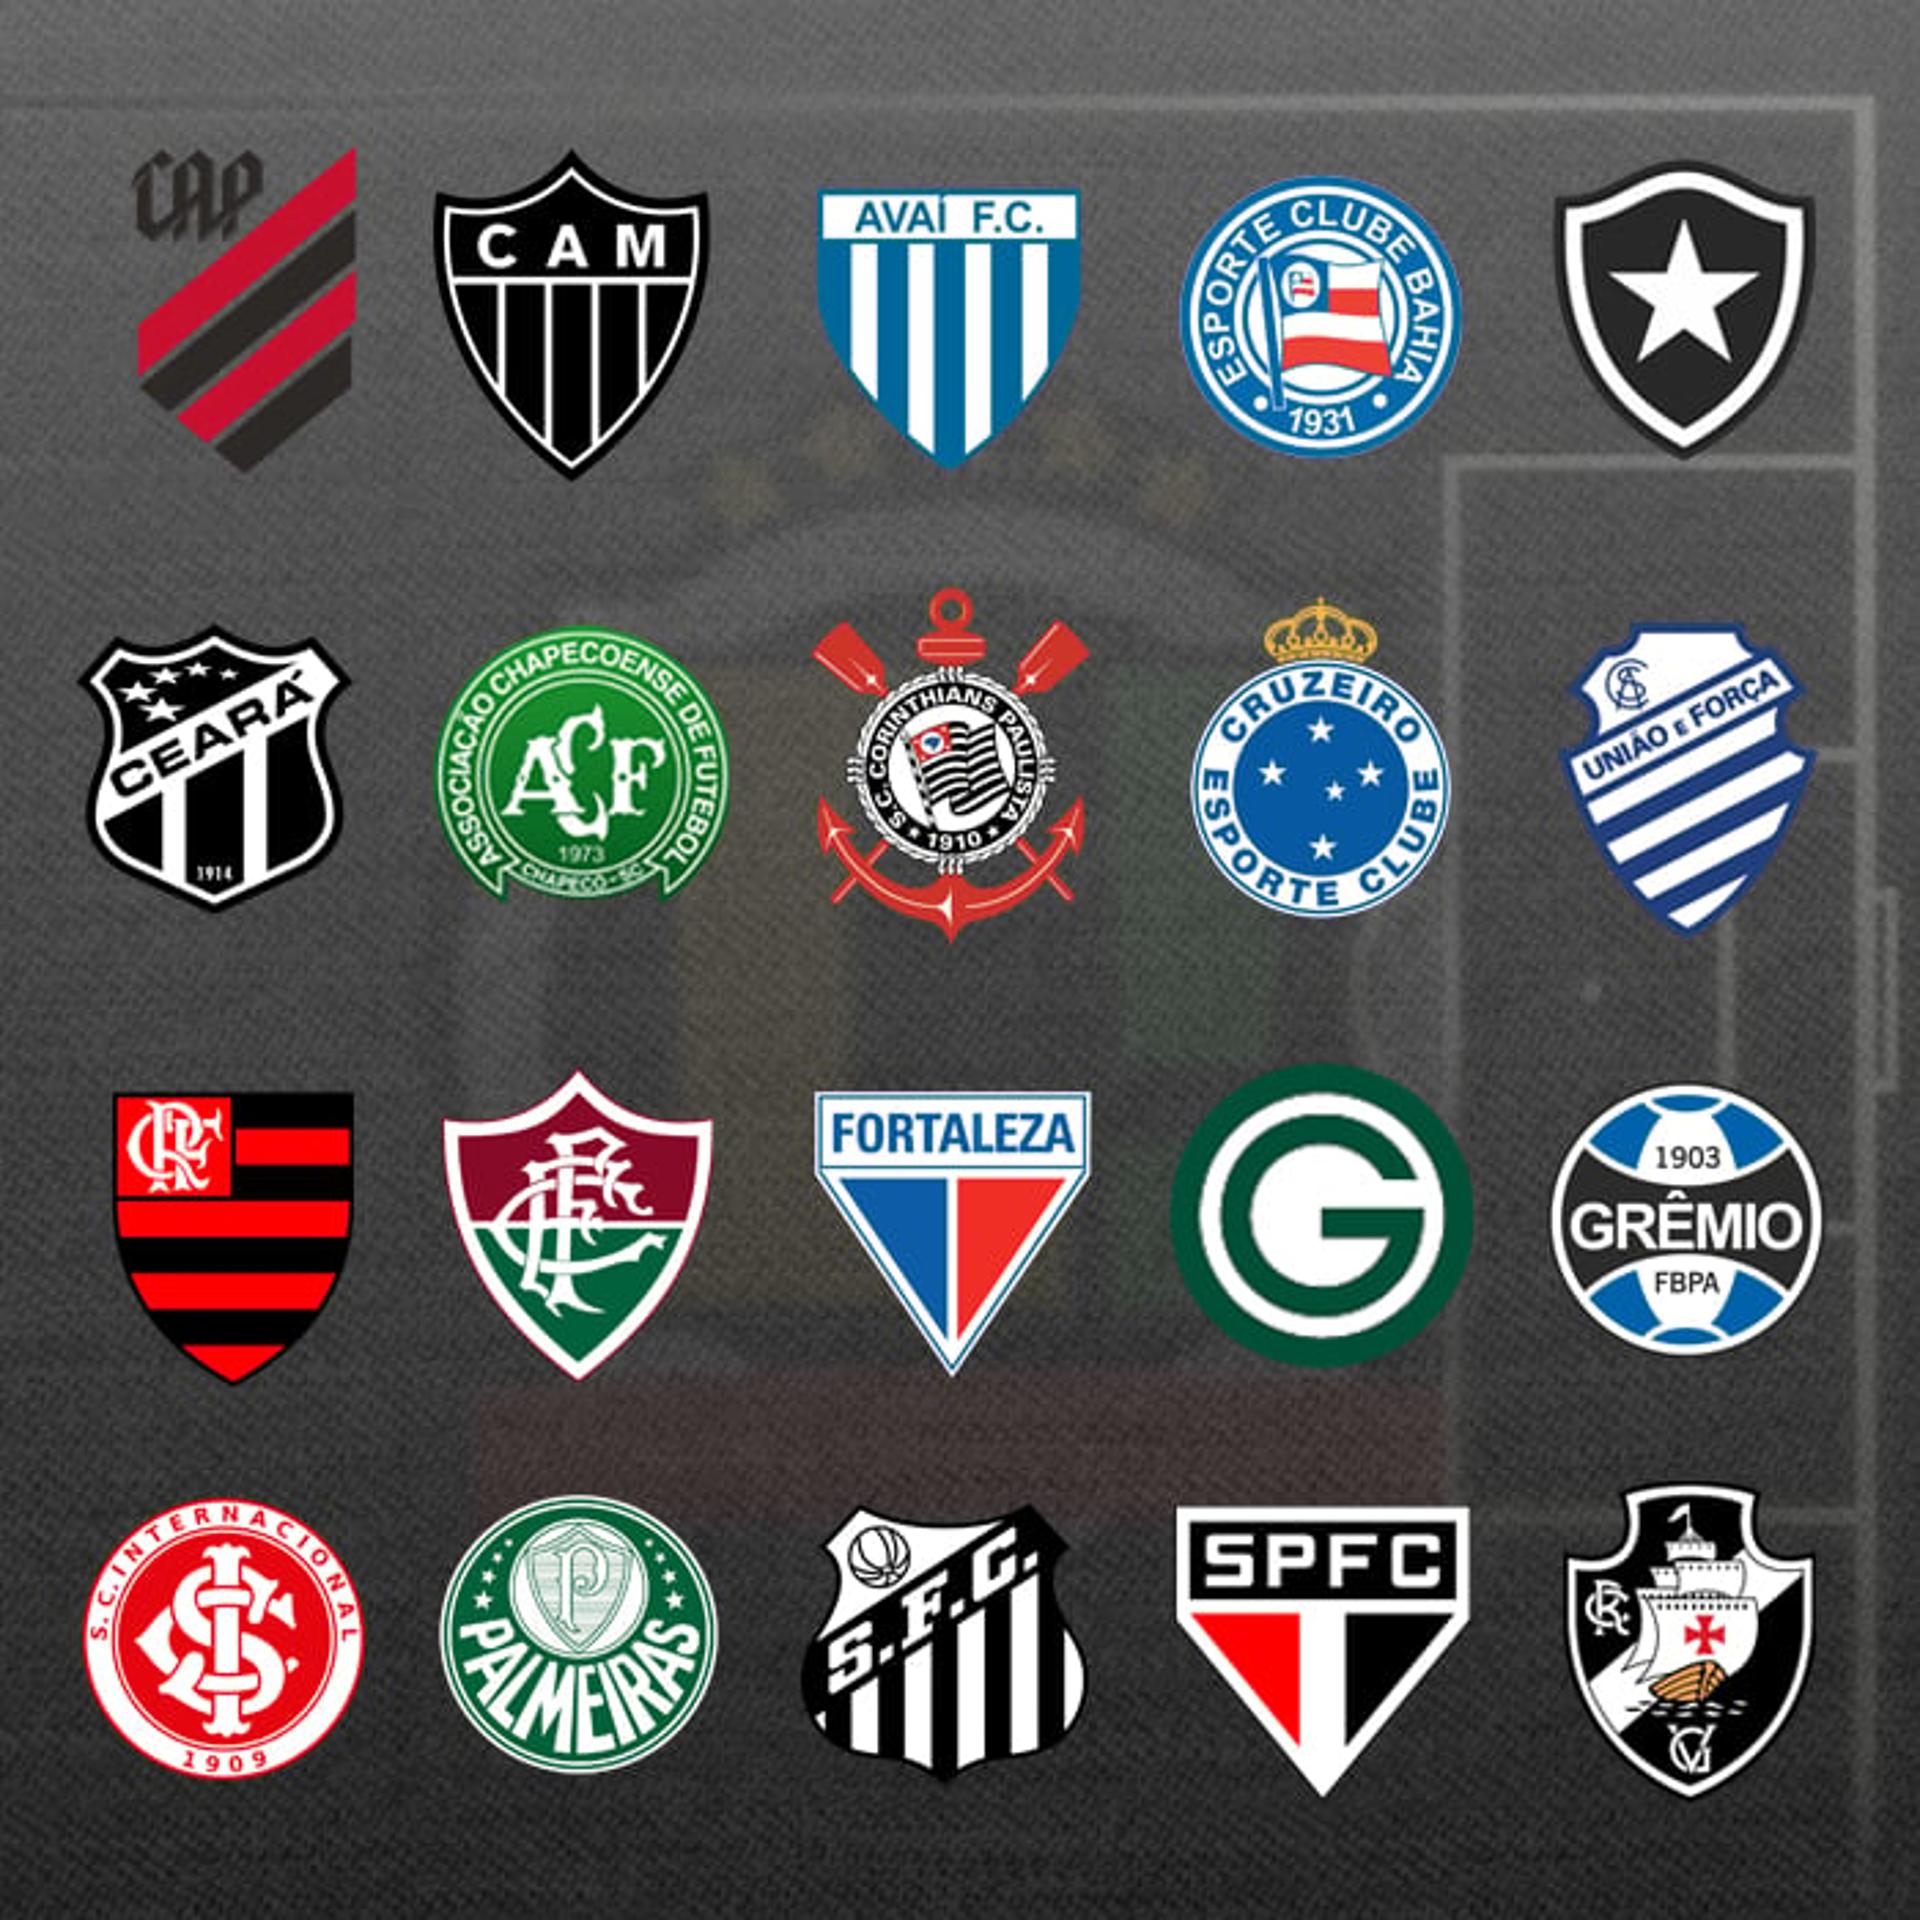 Times Campeonato Brasileiro 2019